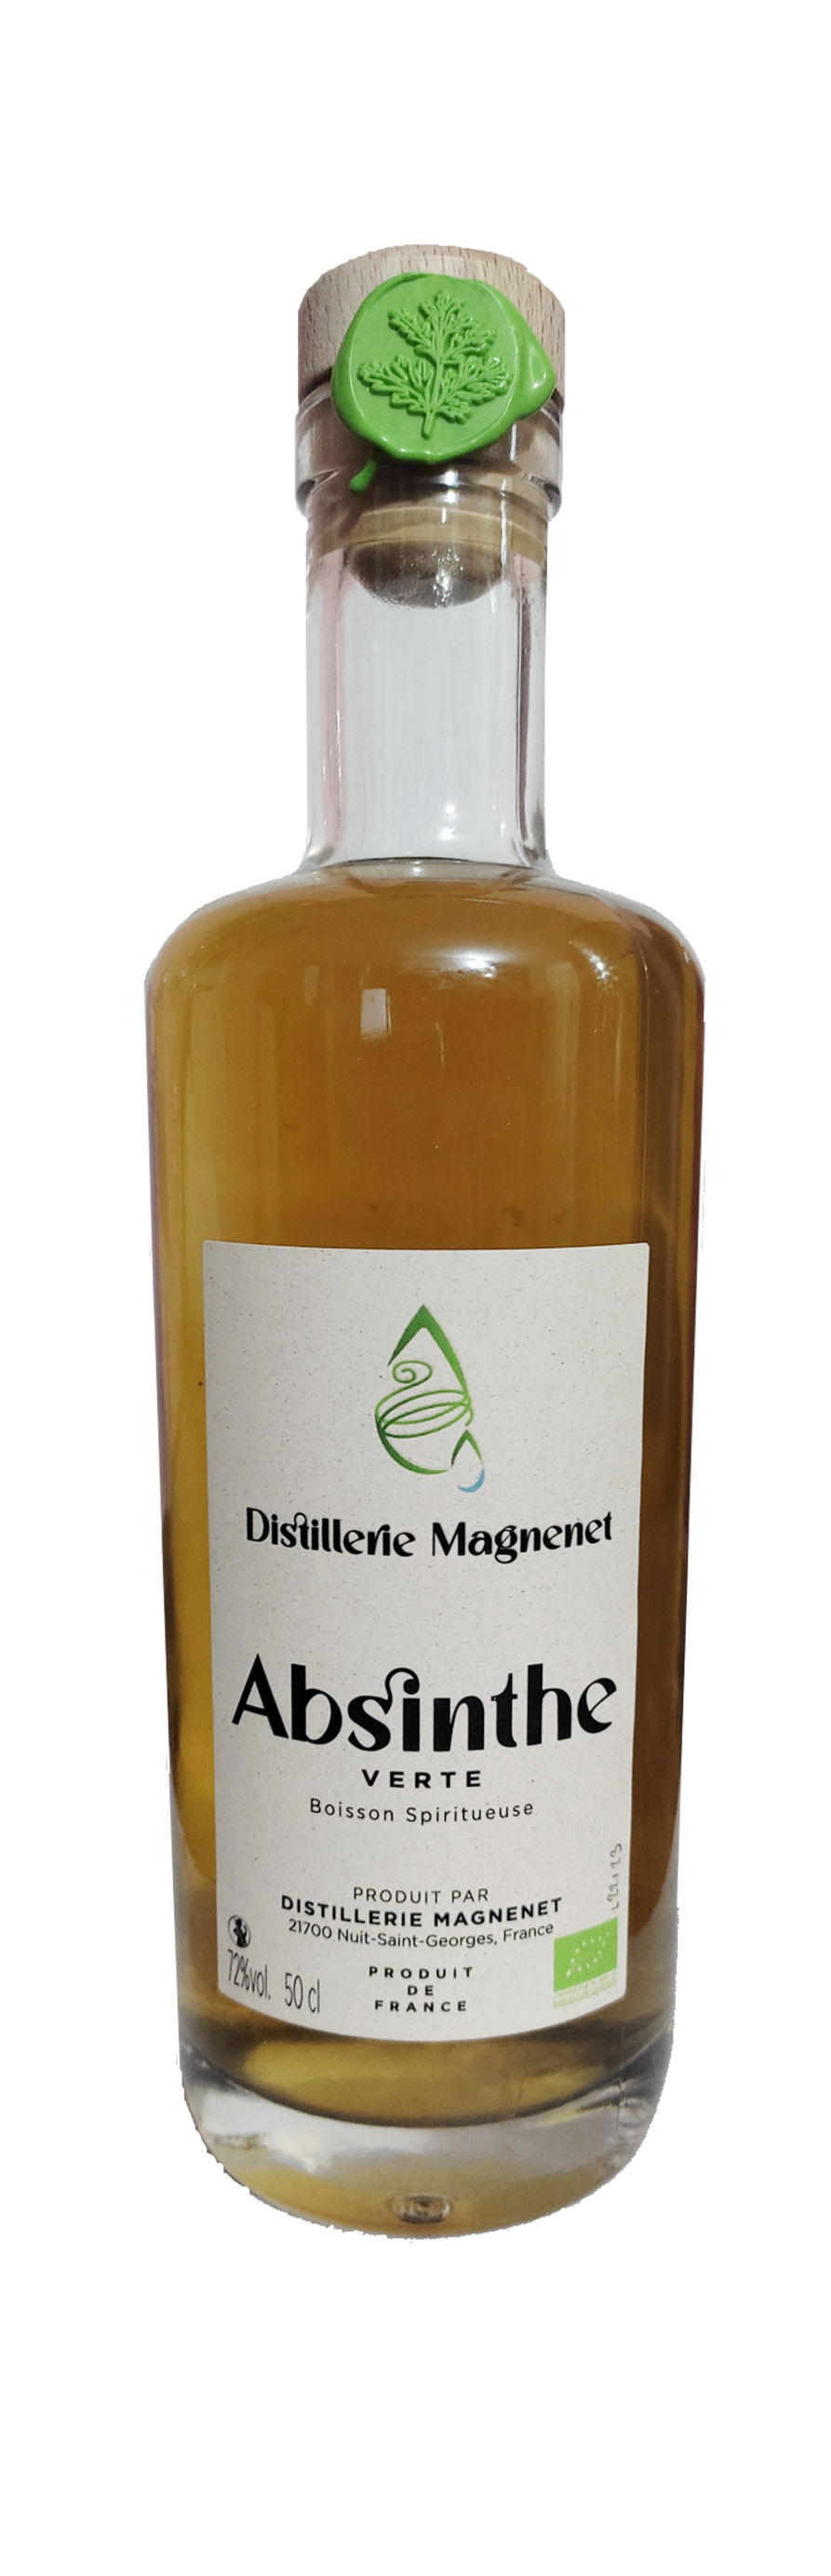 Absinthe Blanche - Distillerie Magnenet